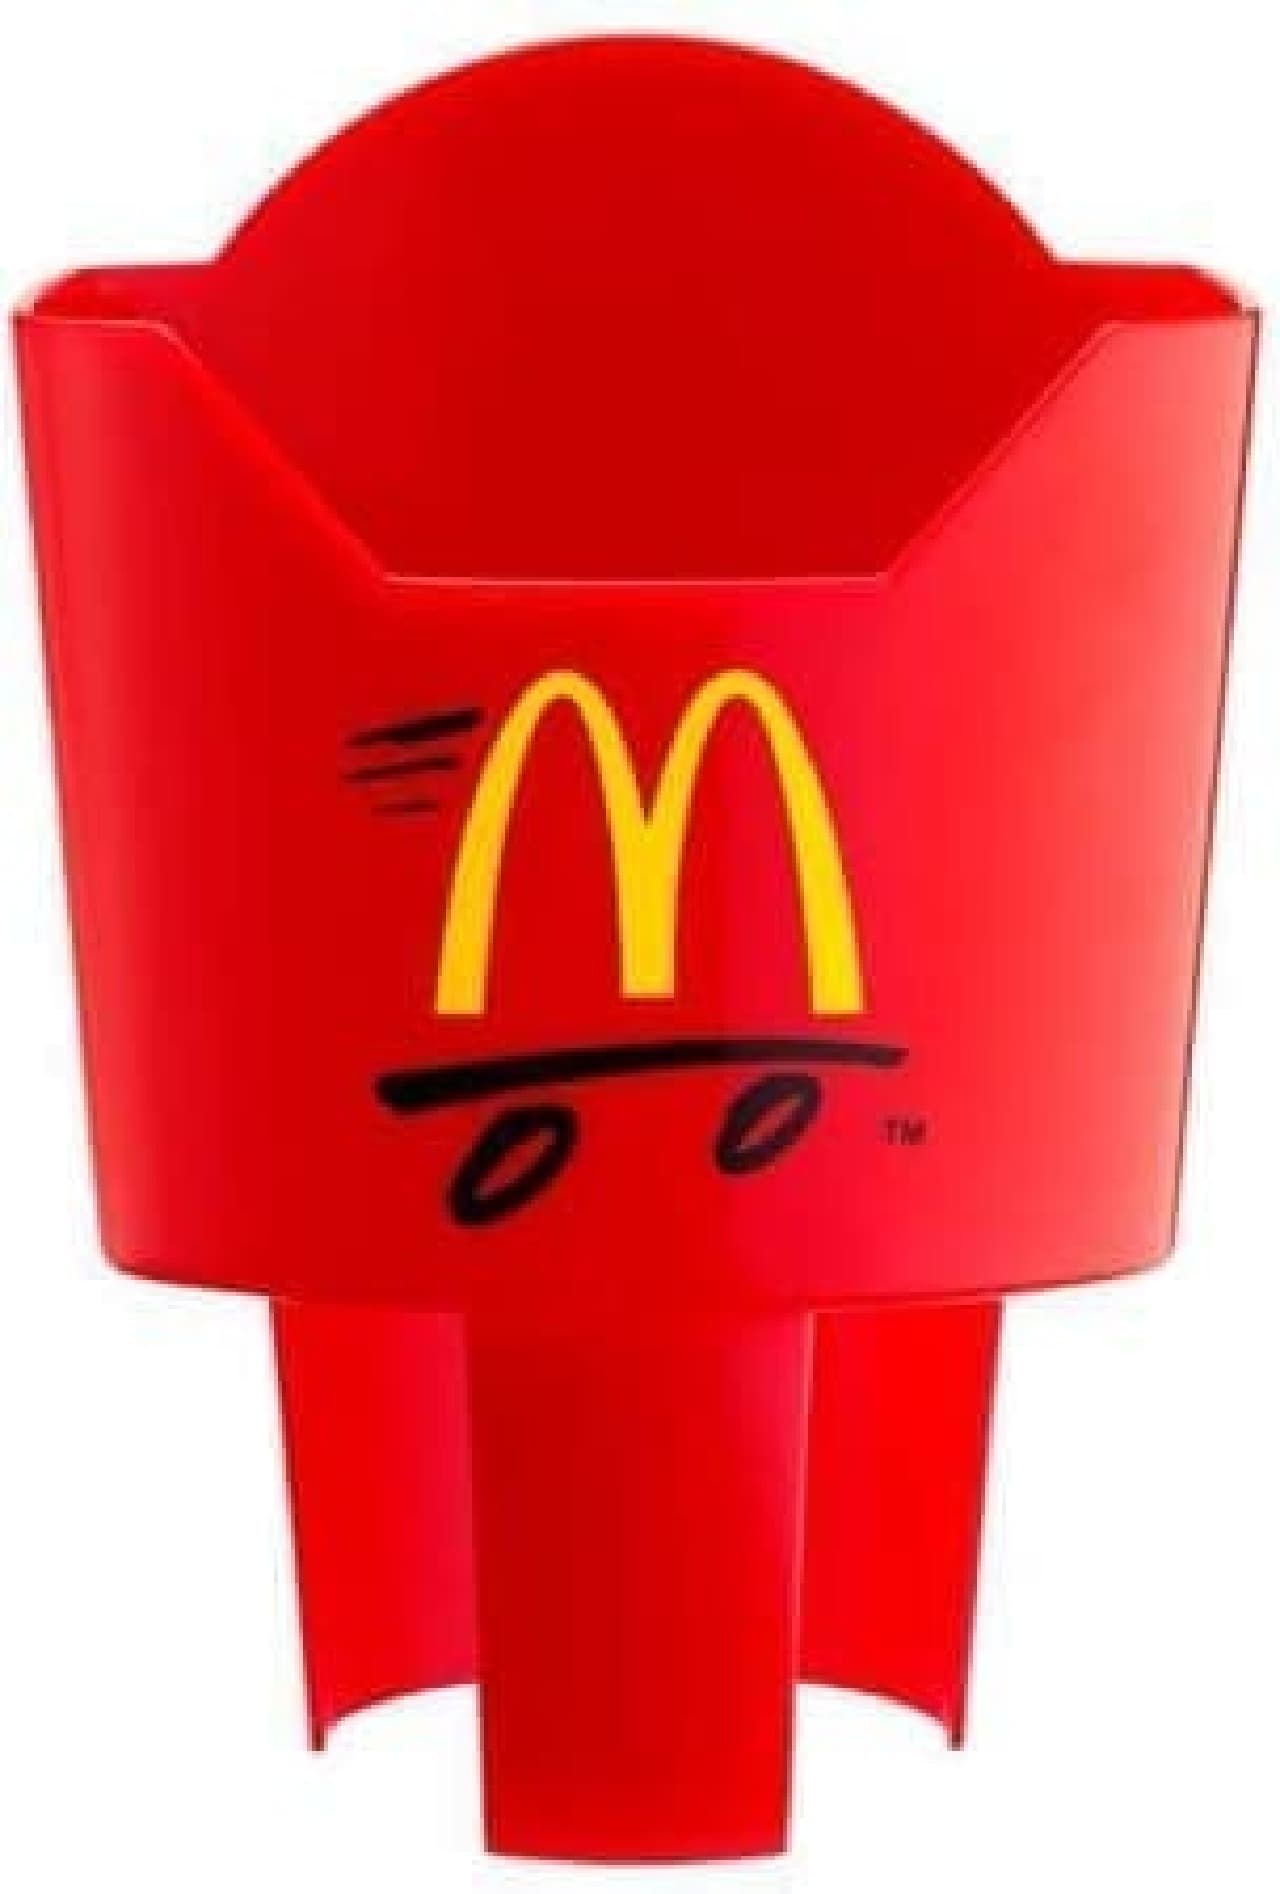 "Potato stand" for bright red McDonald's